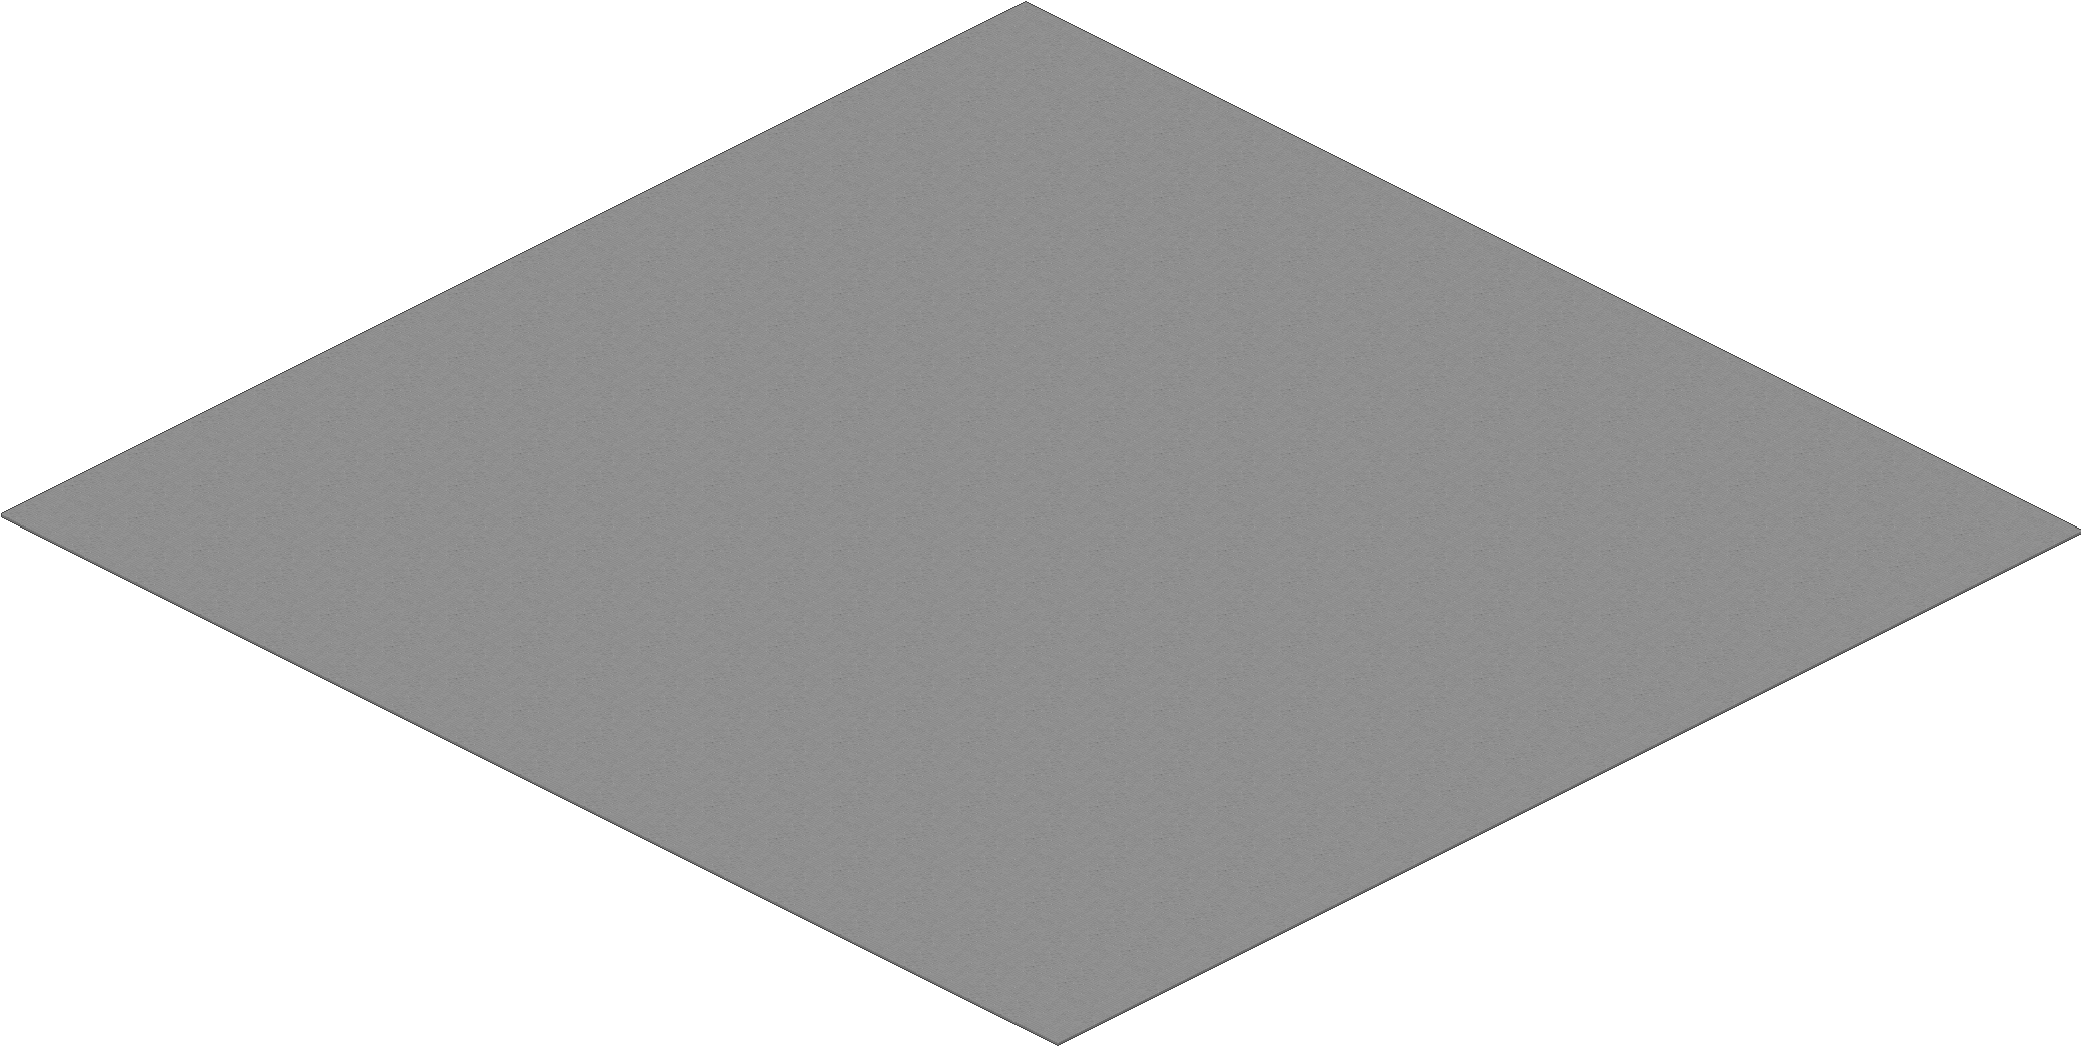 A Grey Hexagon On A Black Background